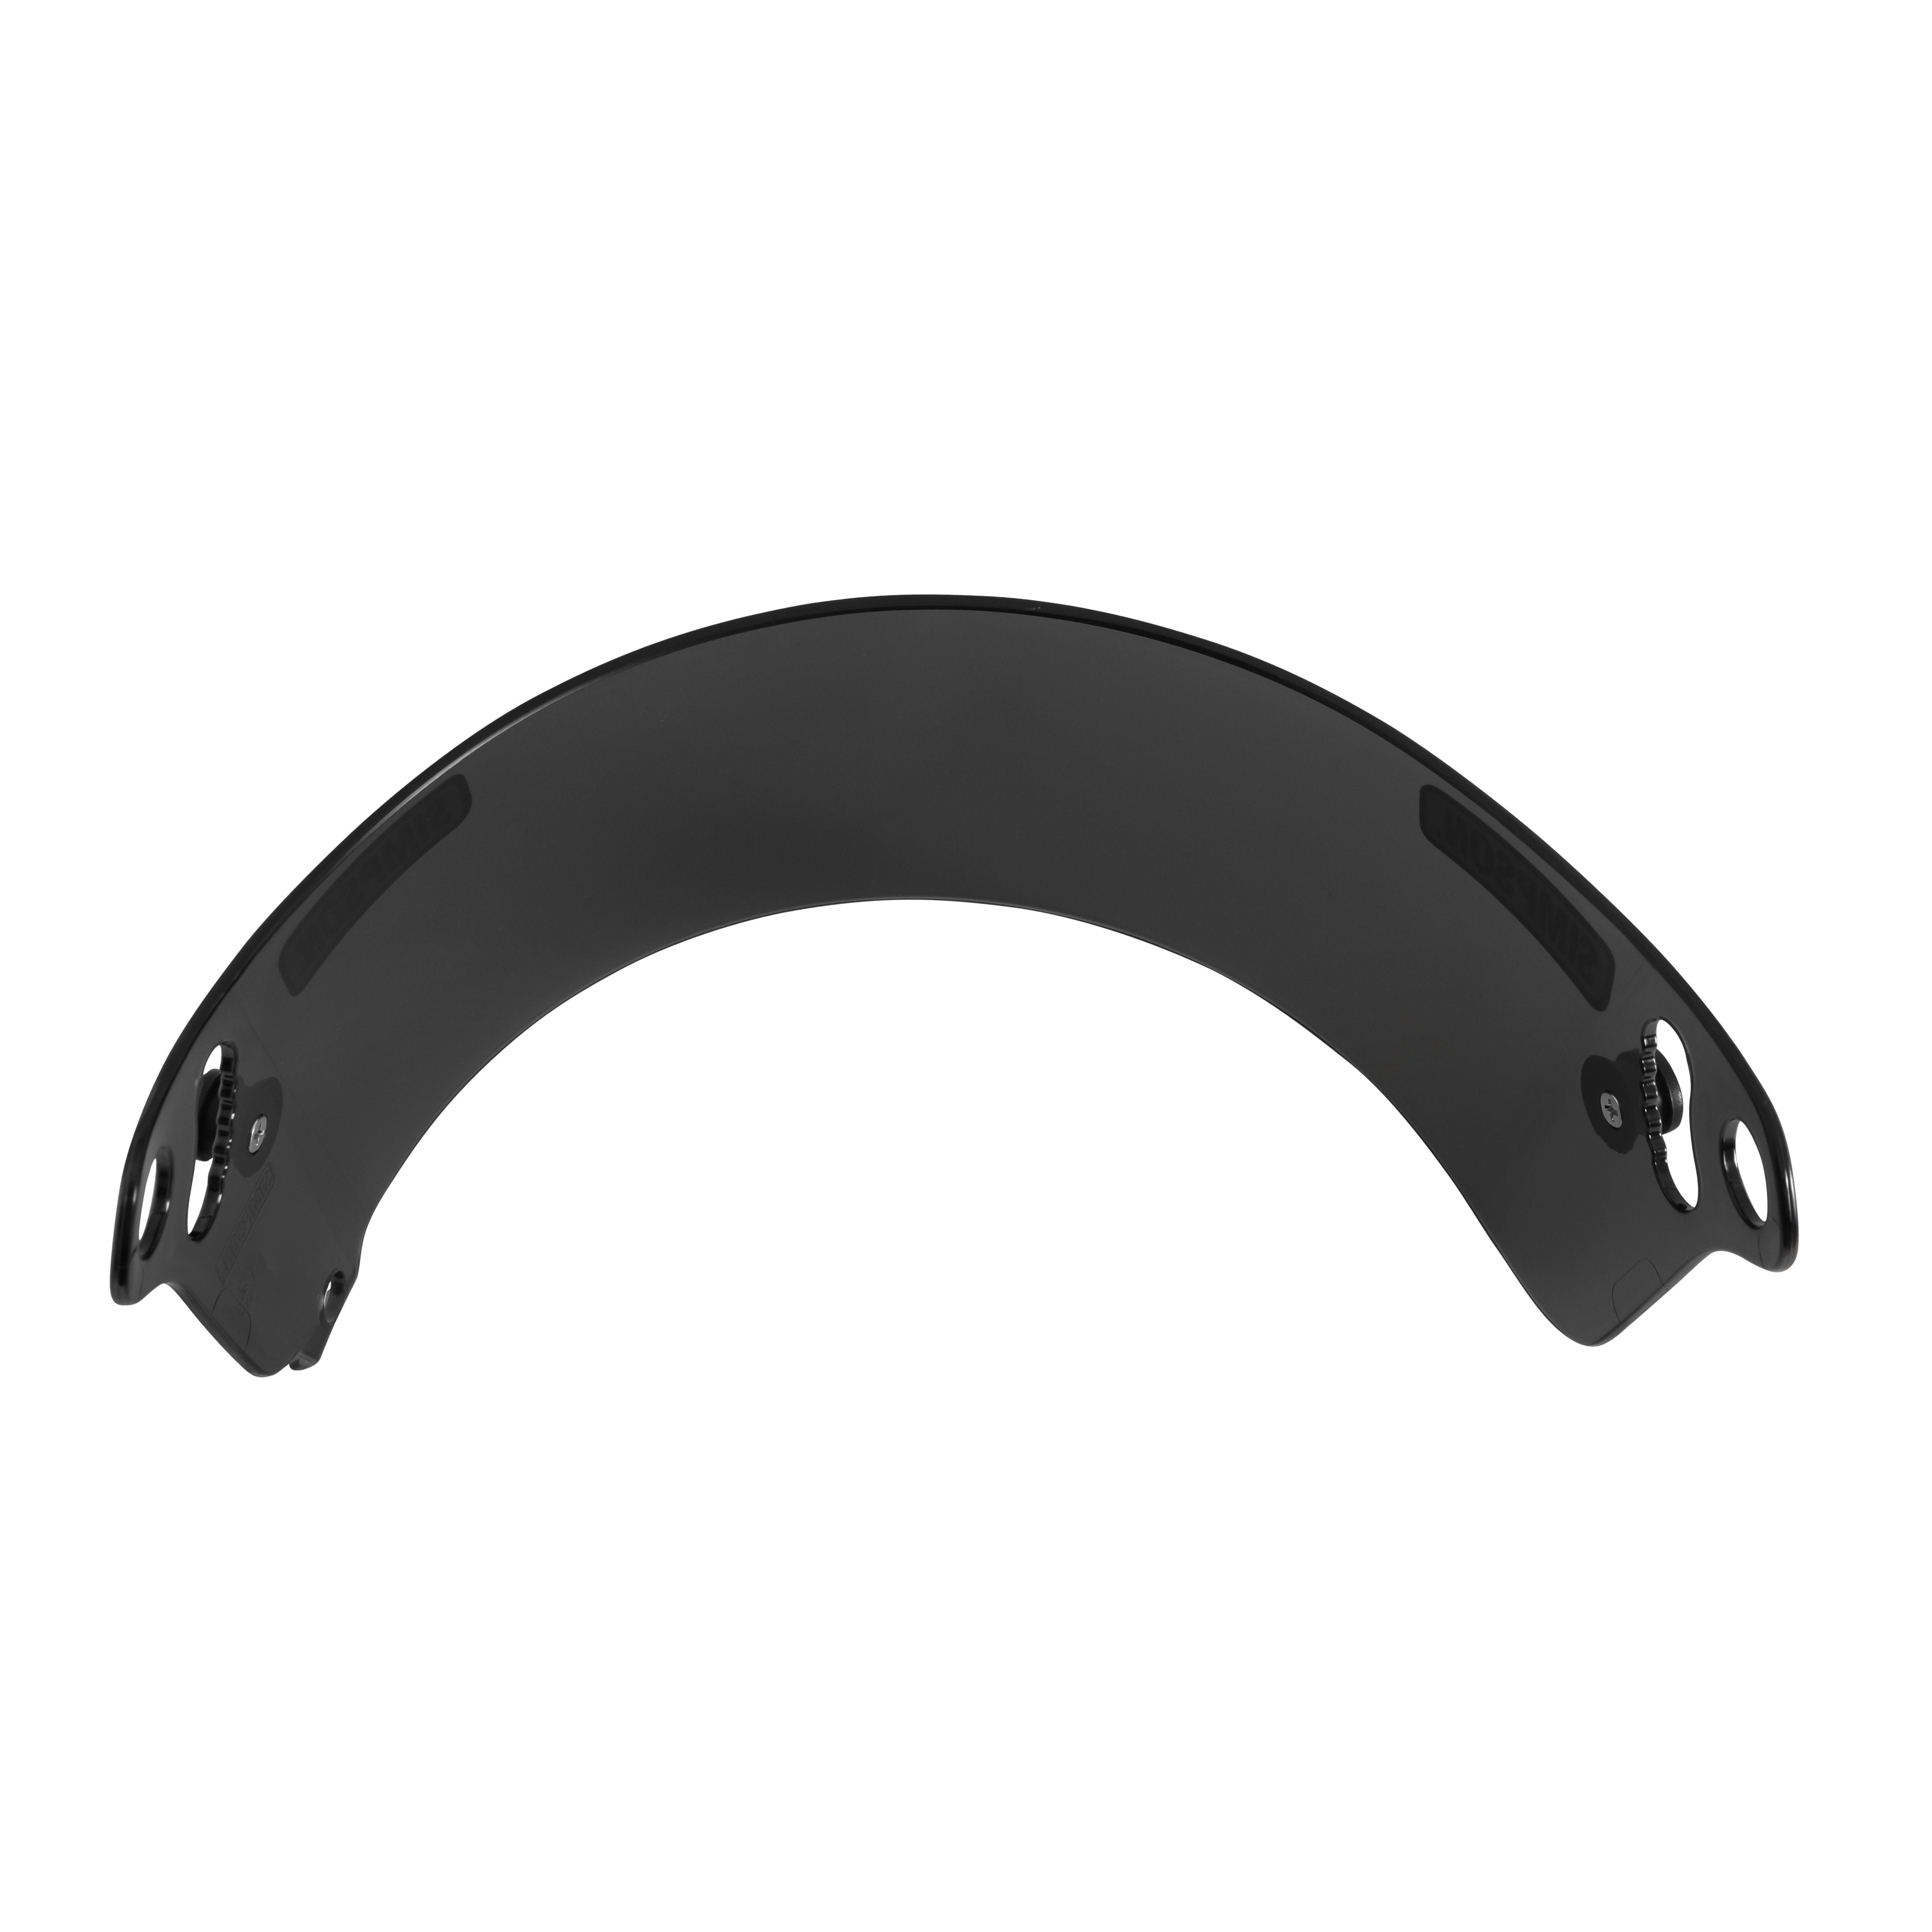 Simpson - Viper Racing Helmet Shield